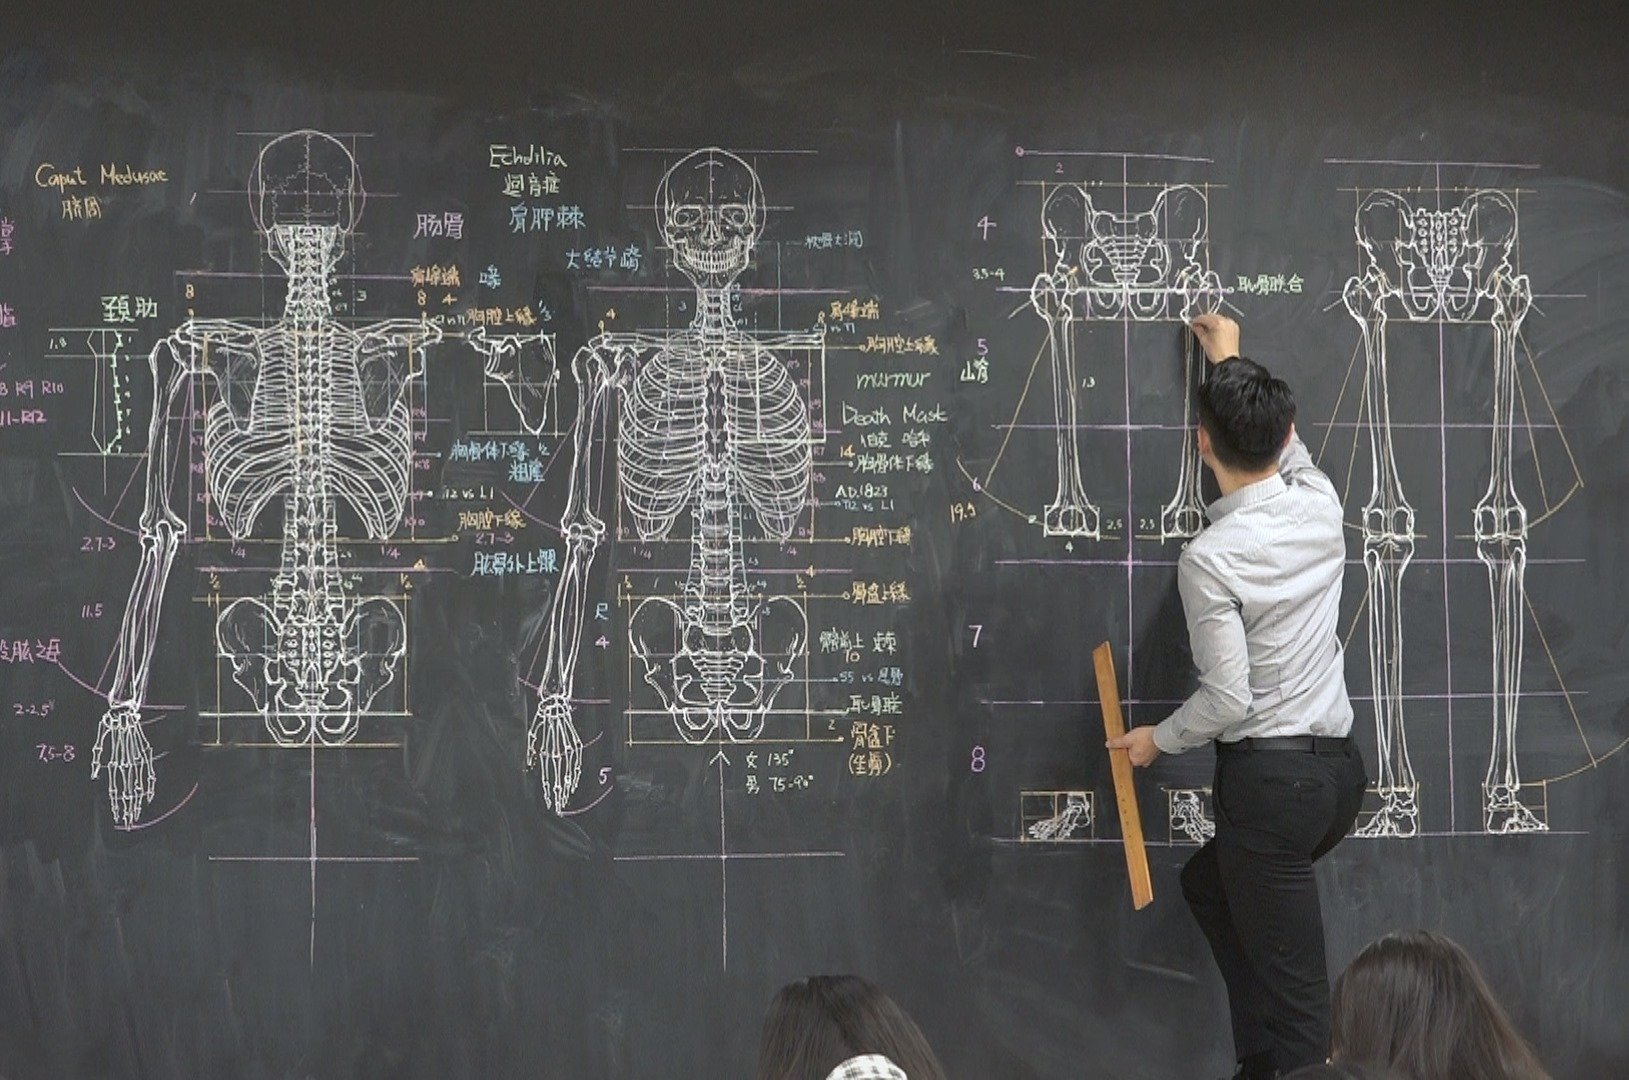 University Teacher Goes Viral For His Insanely Detailed Blackboard Drawings